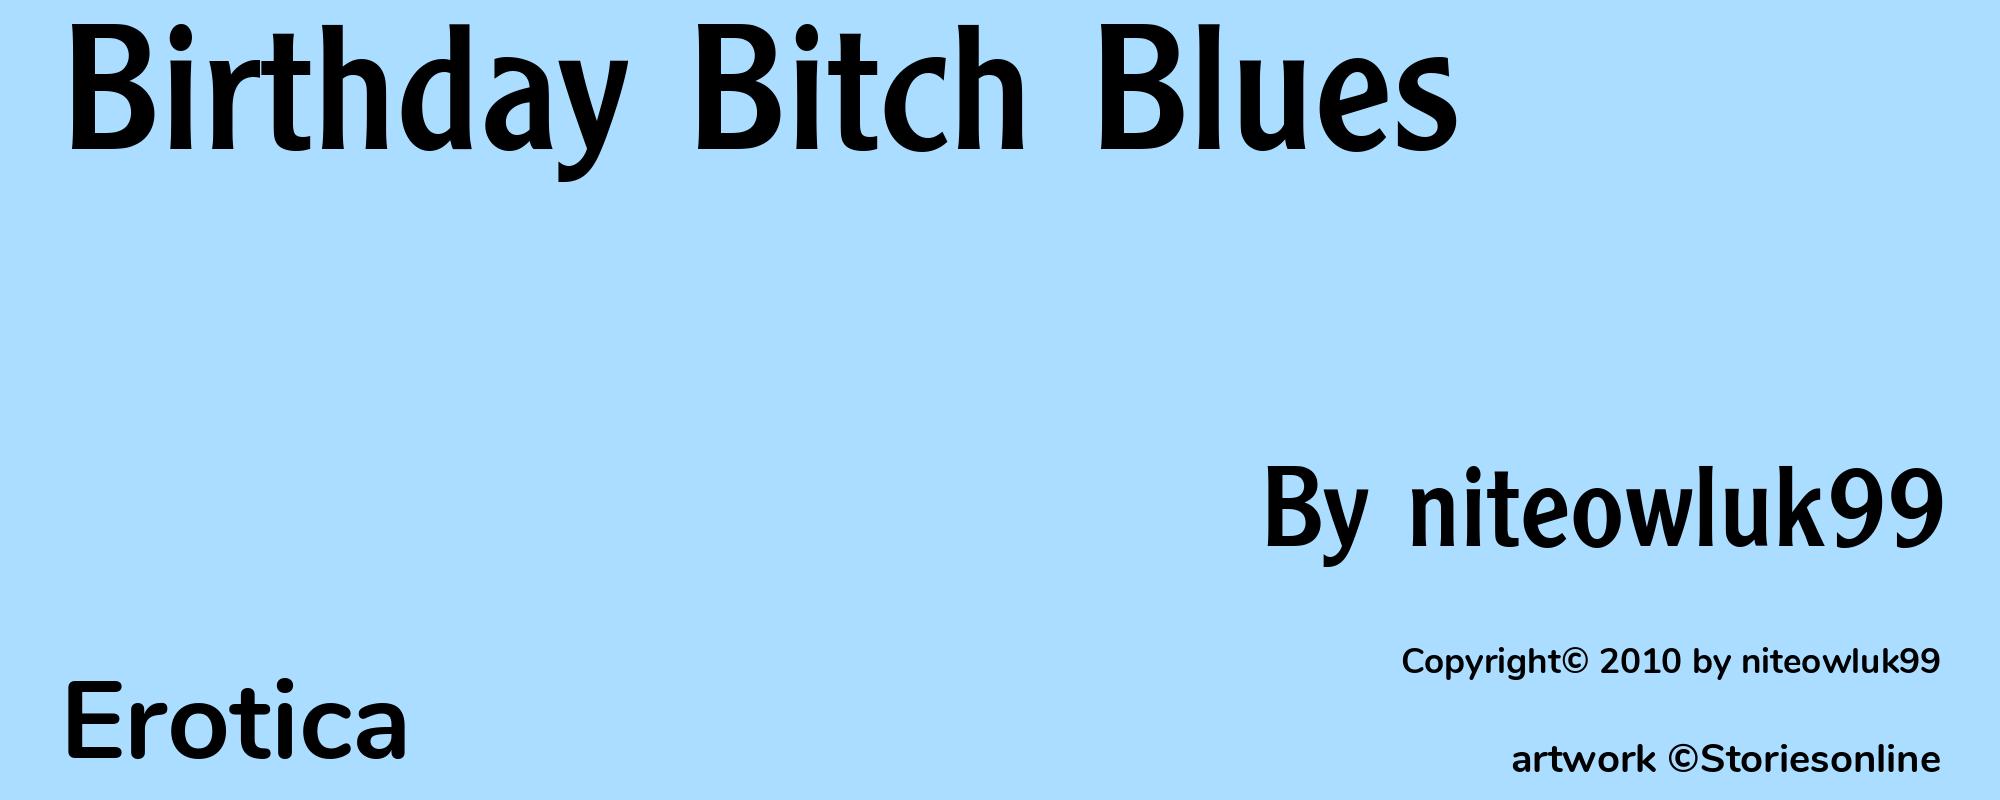 Birthday Bitch Blues - Cover